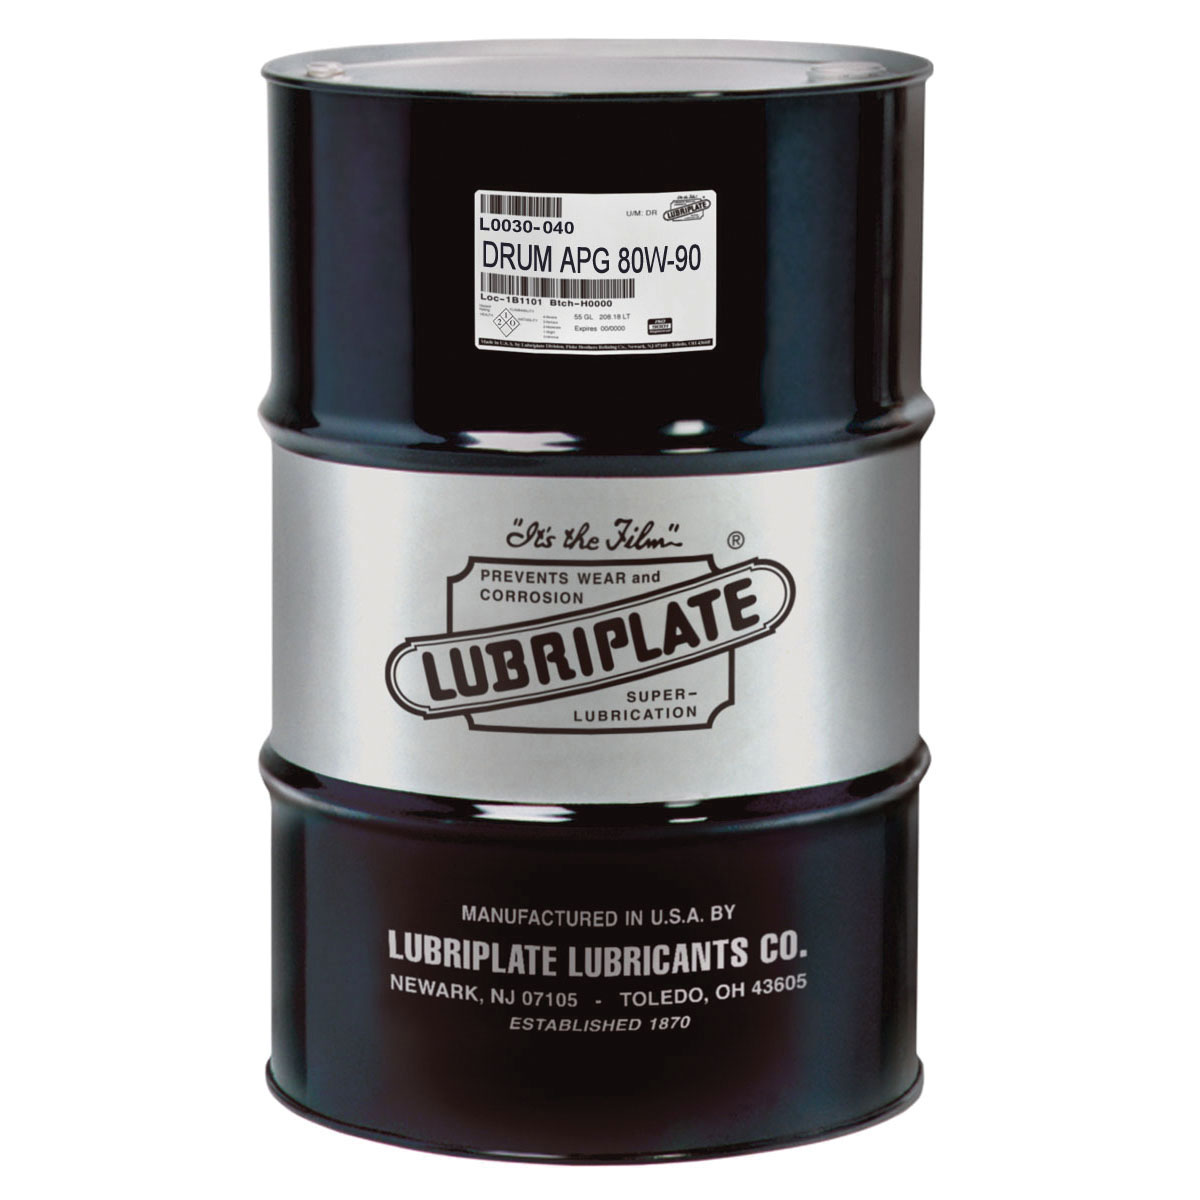 Lubriplate® L0030-040 APG-80W-90 Extreme Pressure Heavy Duty Gear Oil, 415 lb Drum, Additive Odor/Scent, Liquid Form, ISO 150 Grade, Amber